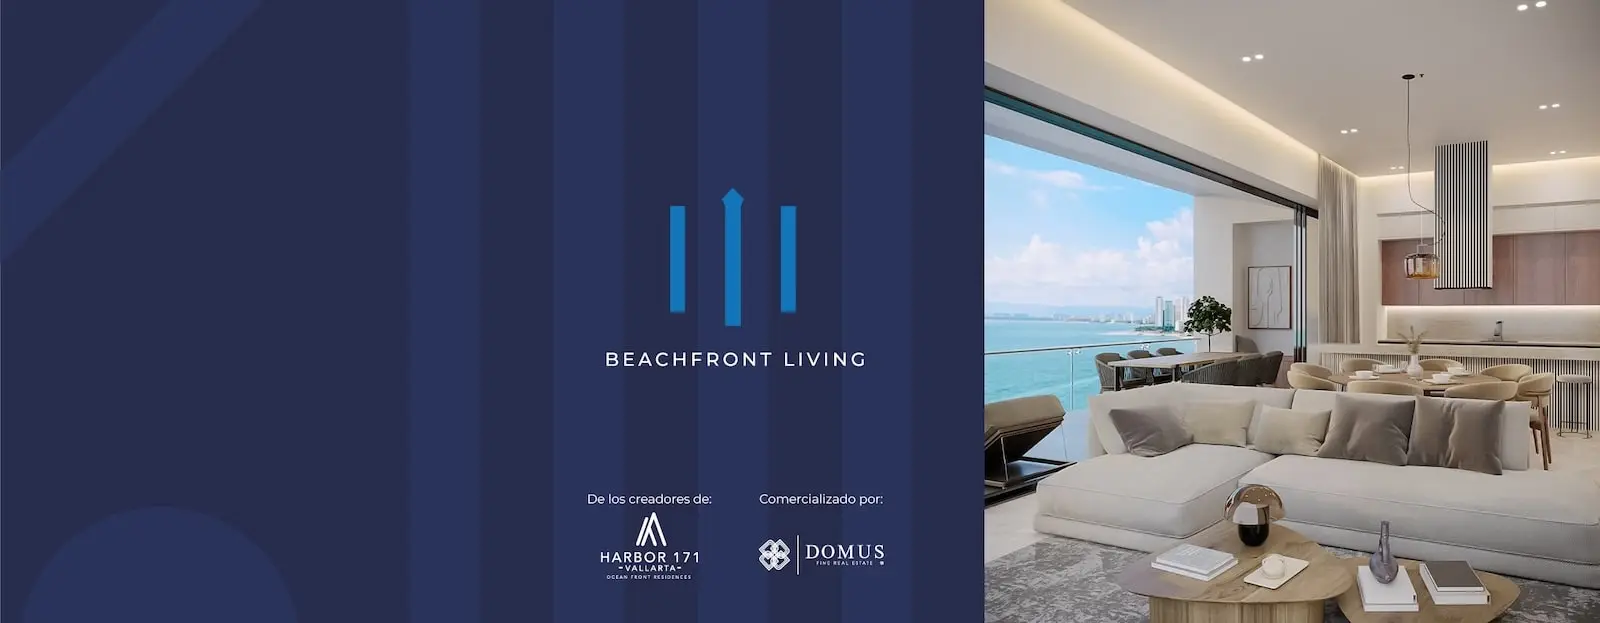 Beachfront Living - Próximamente